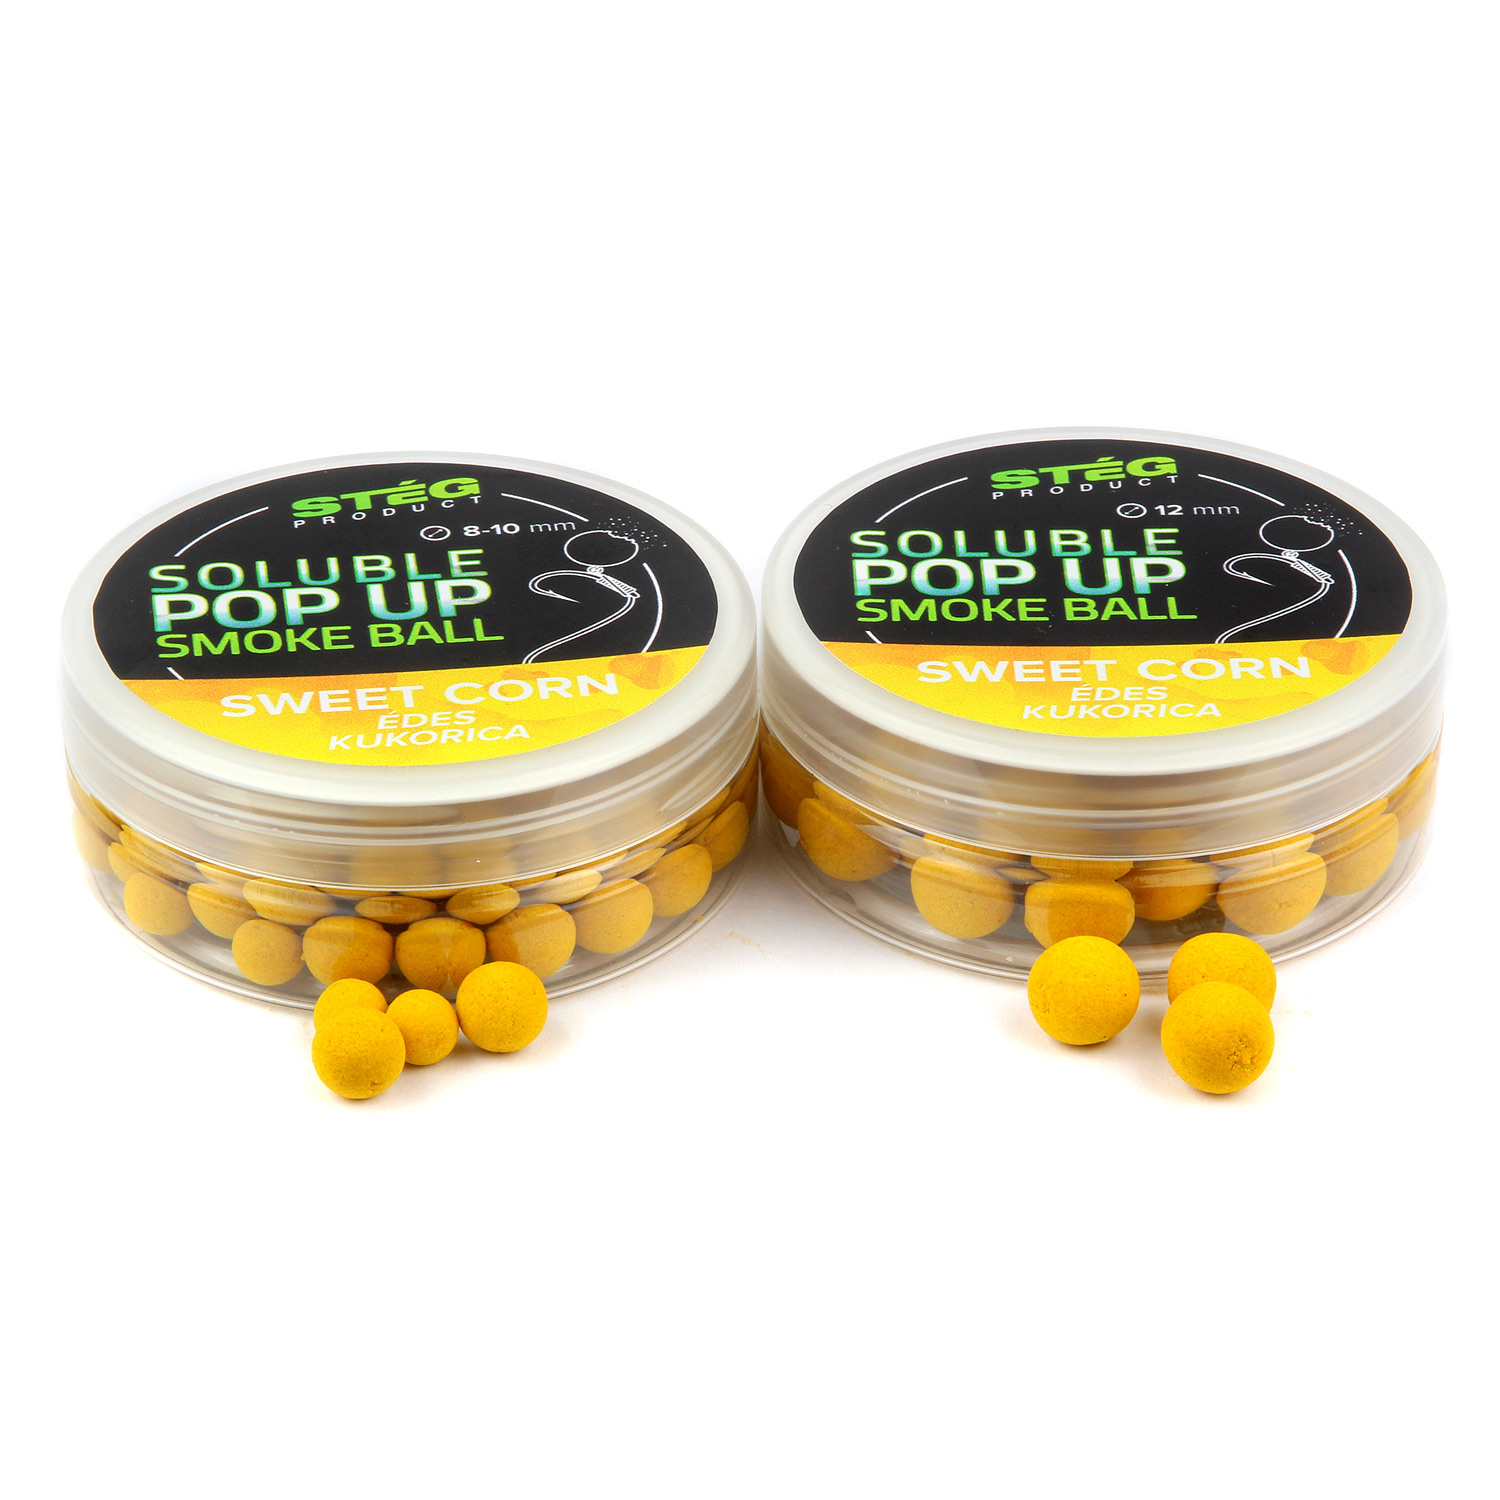 Stg Product Soluble Pop Up Smoke Ball 8-10mm Sweet Corn 20g